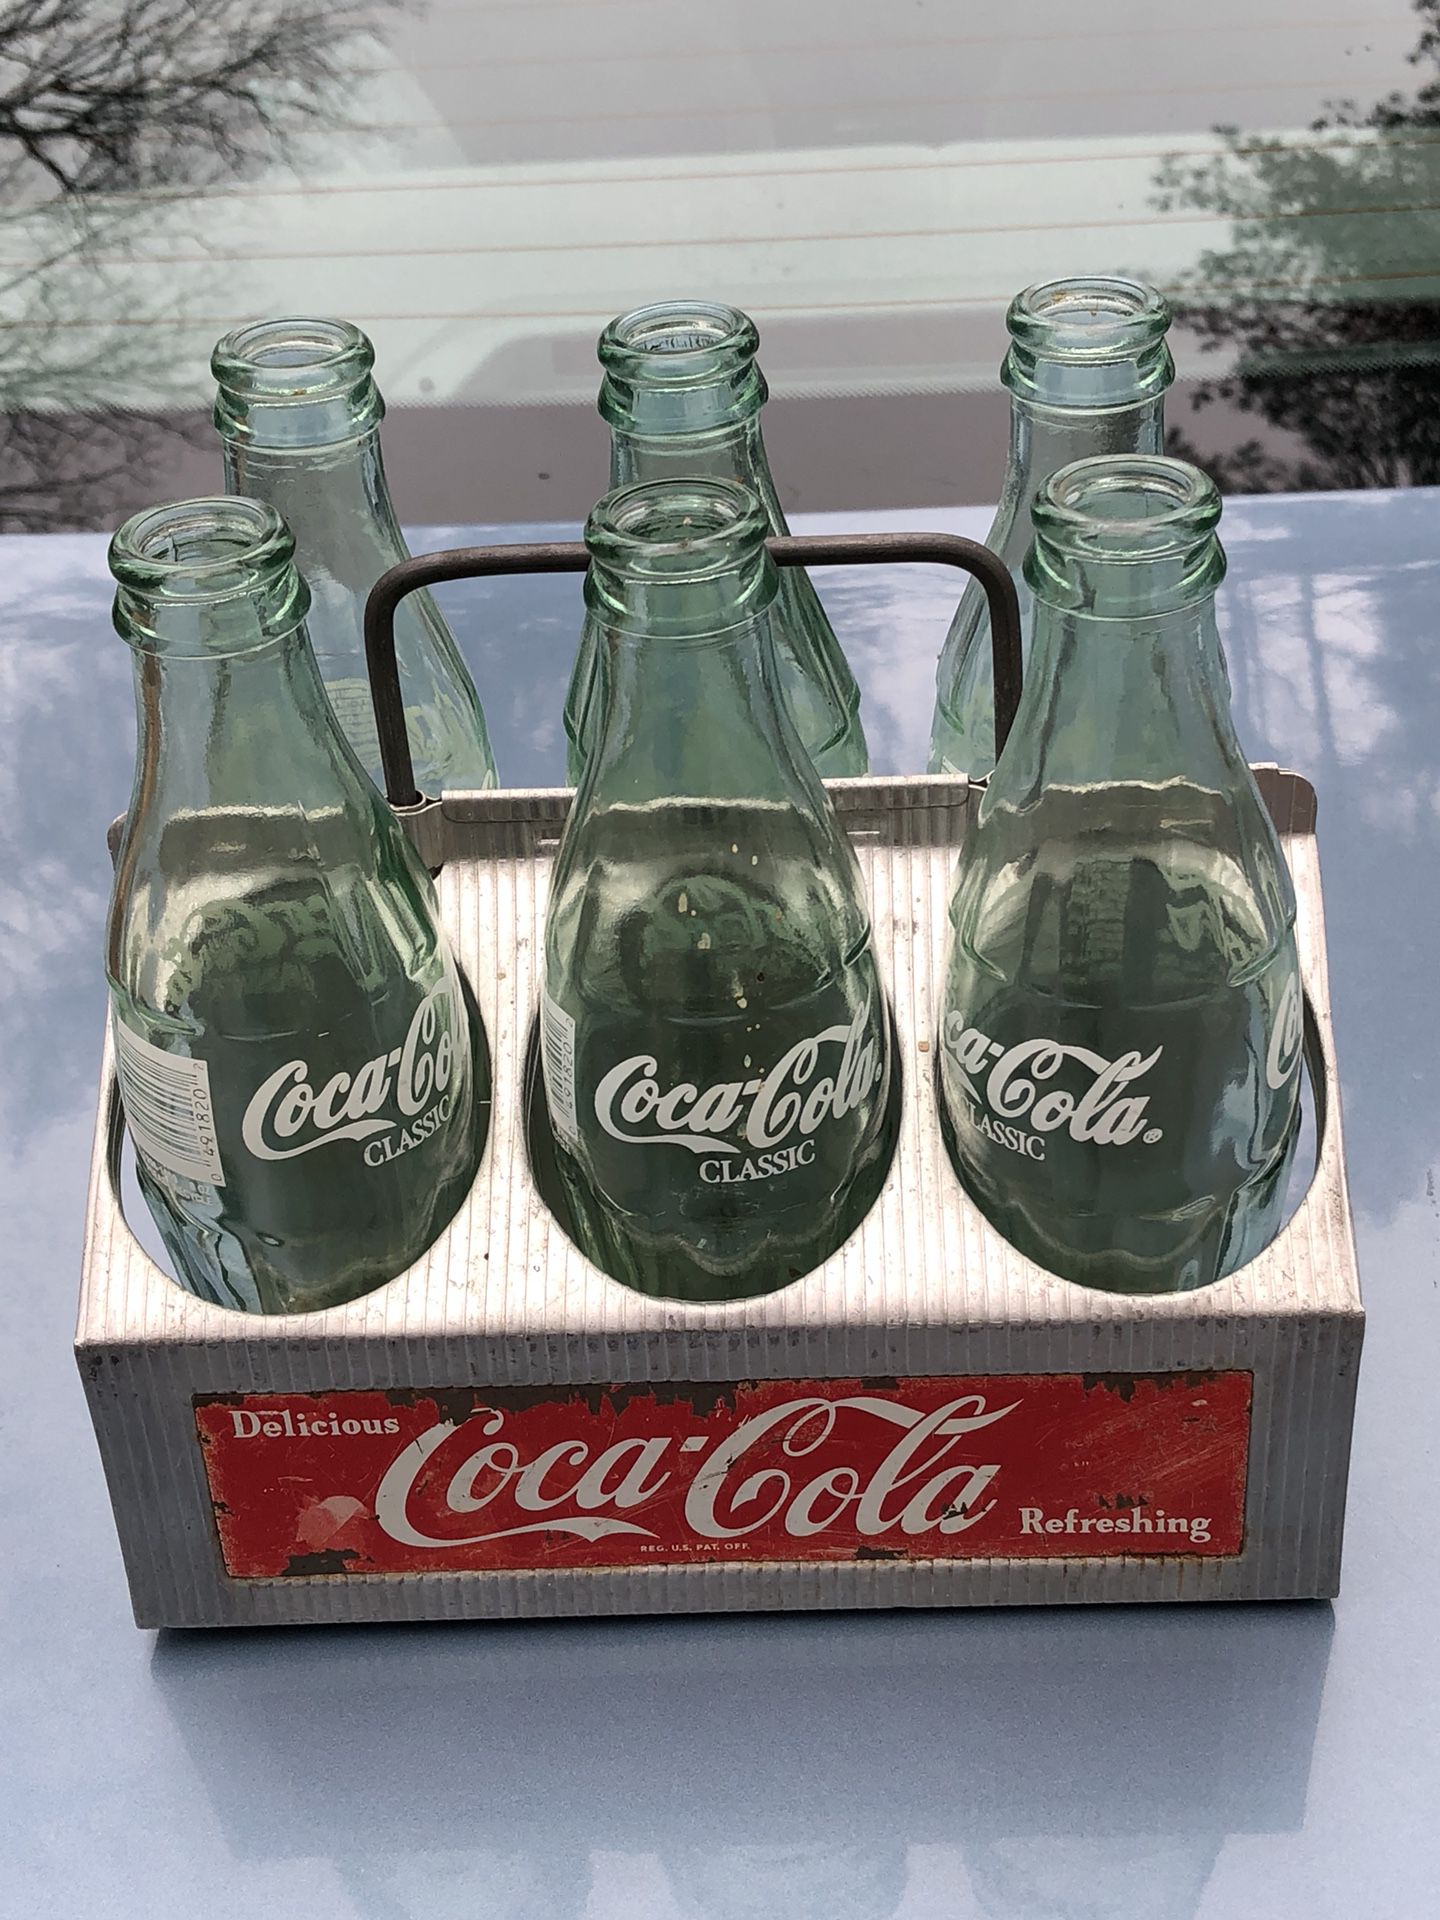 Coca Cola holder with bottles